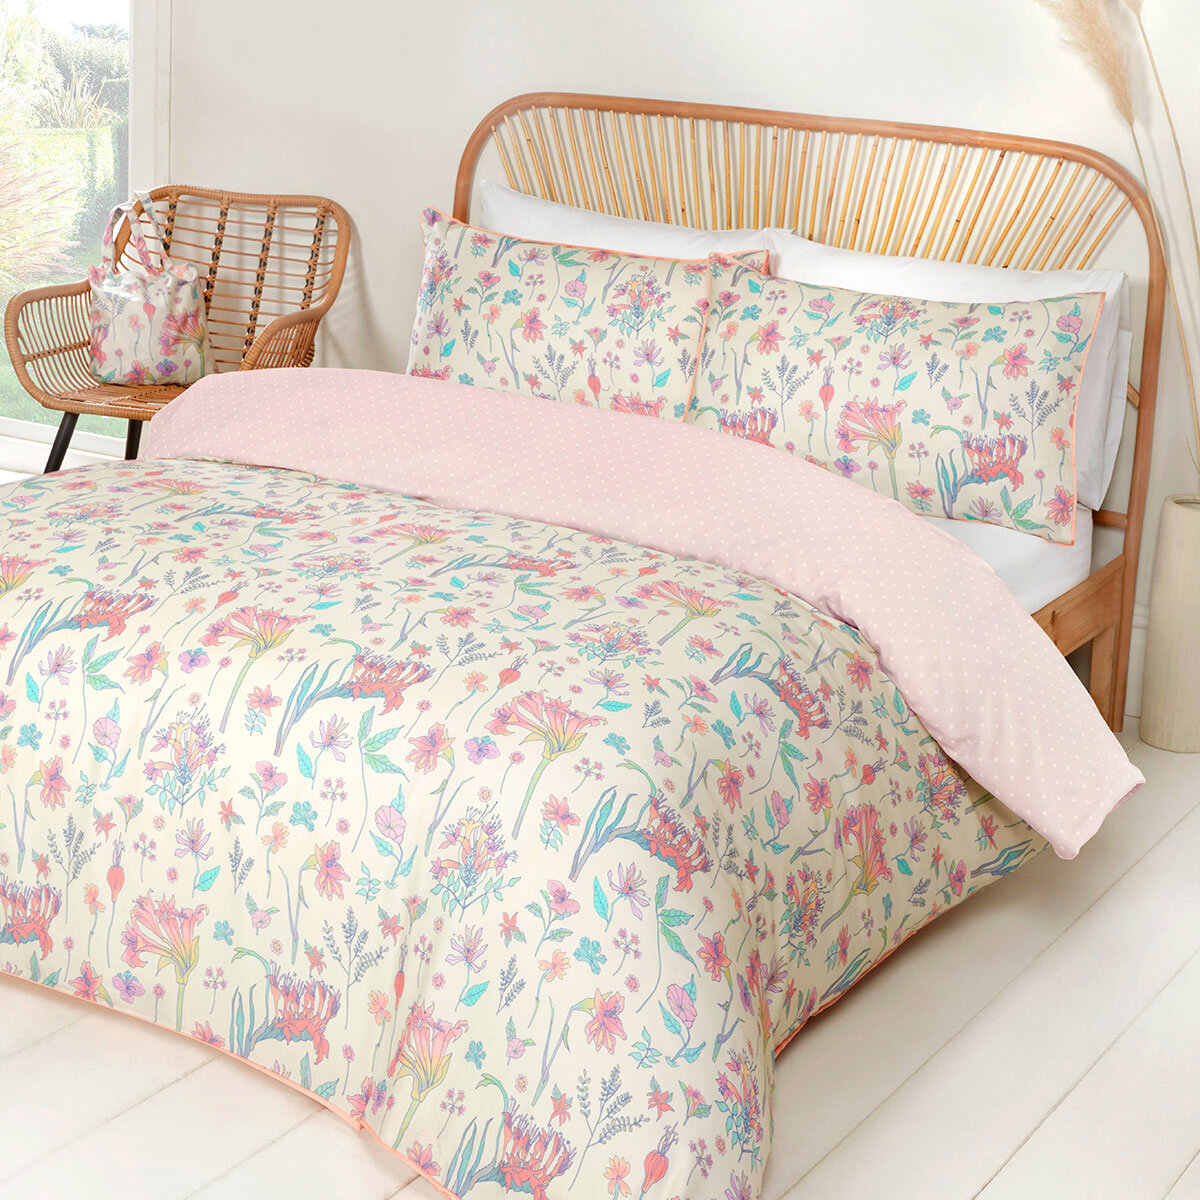 Tabitha Webb Botanical Cotton 3 Piece Bed Set in 4 Sizes